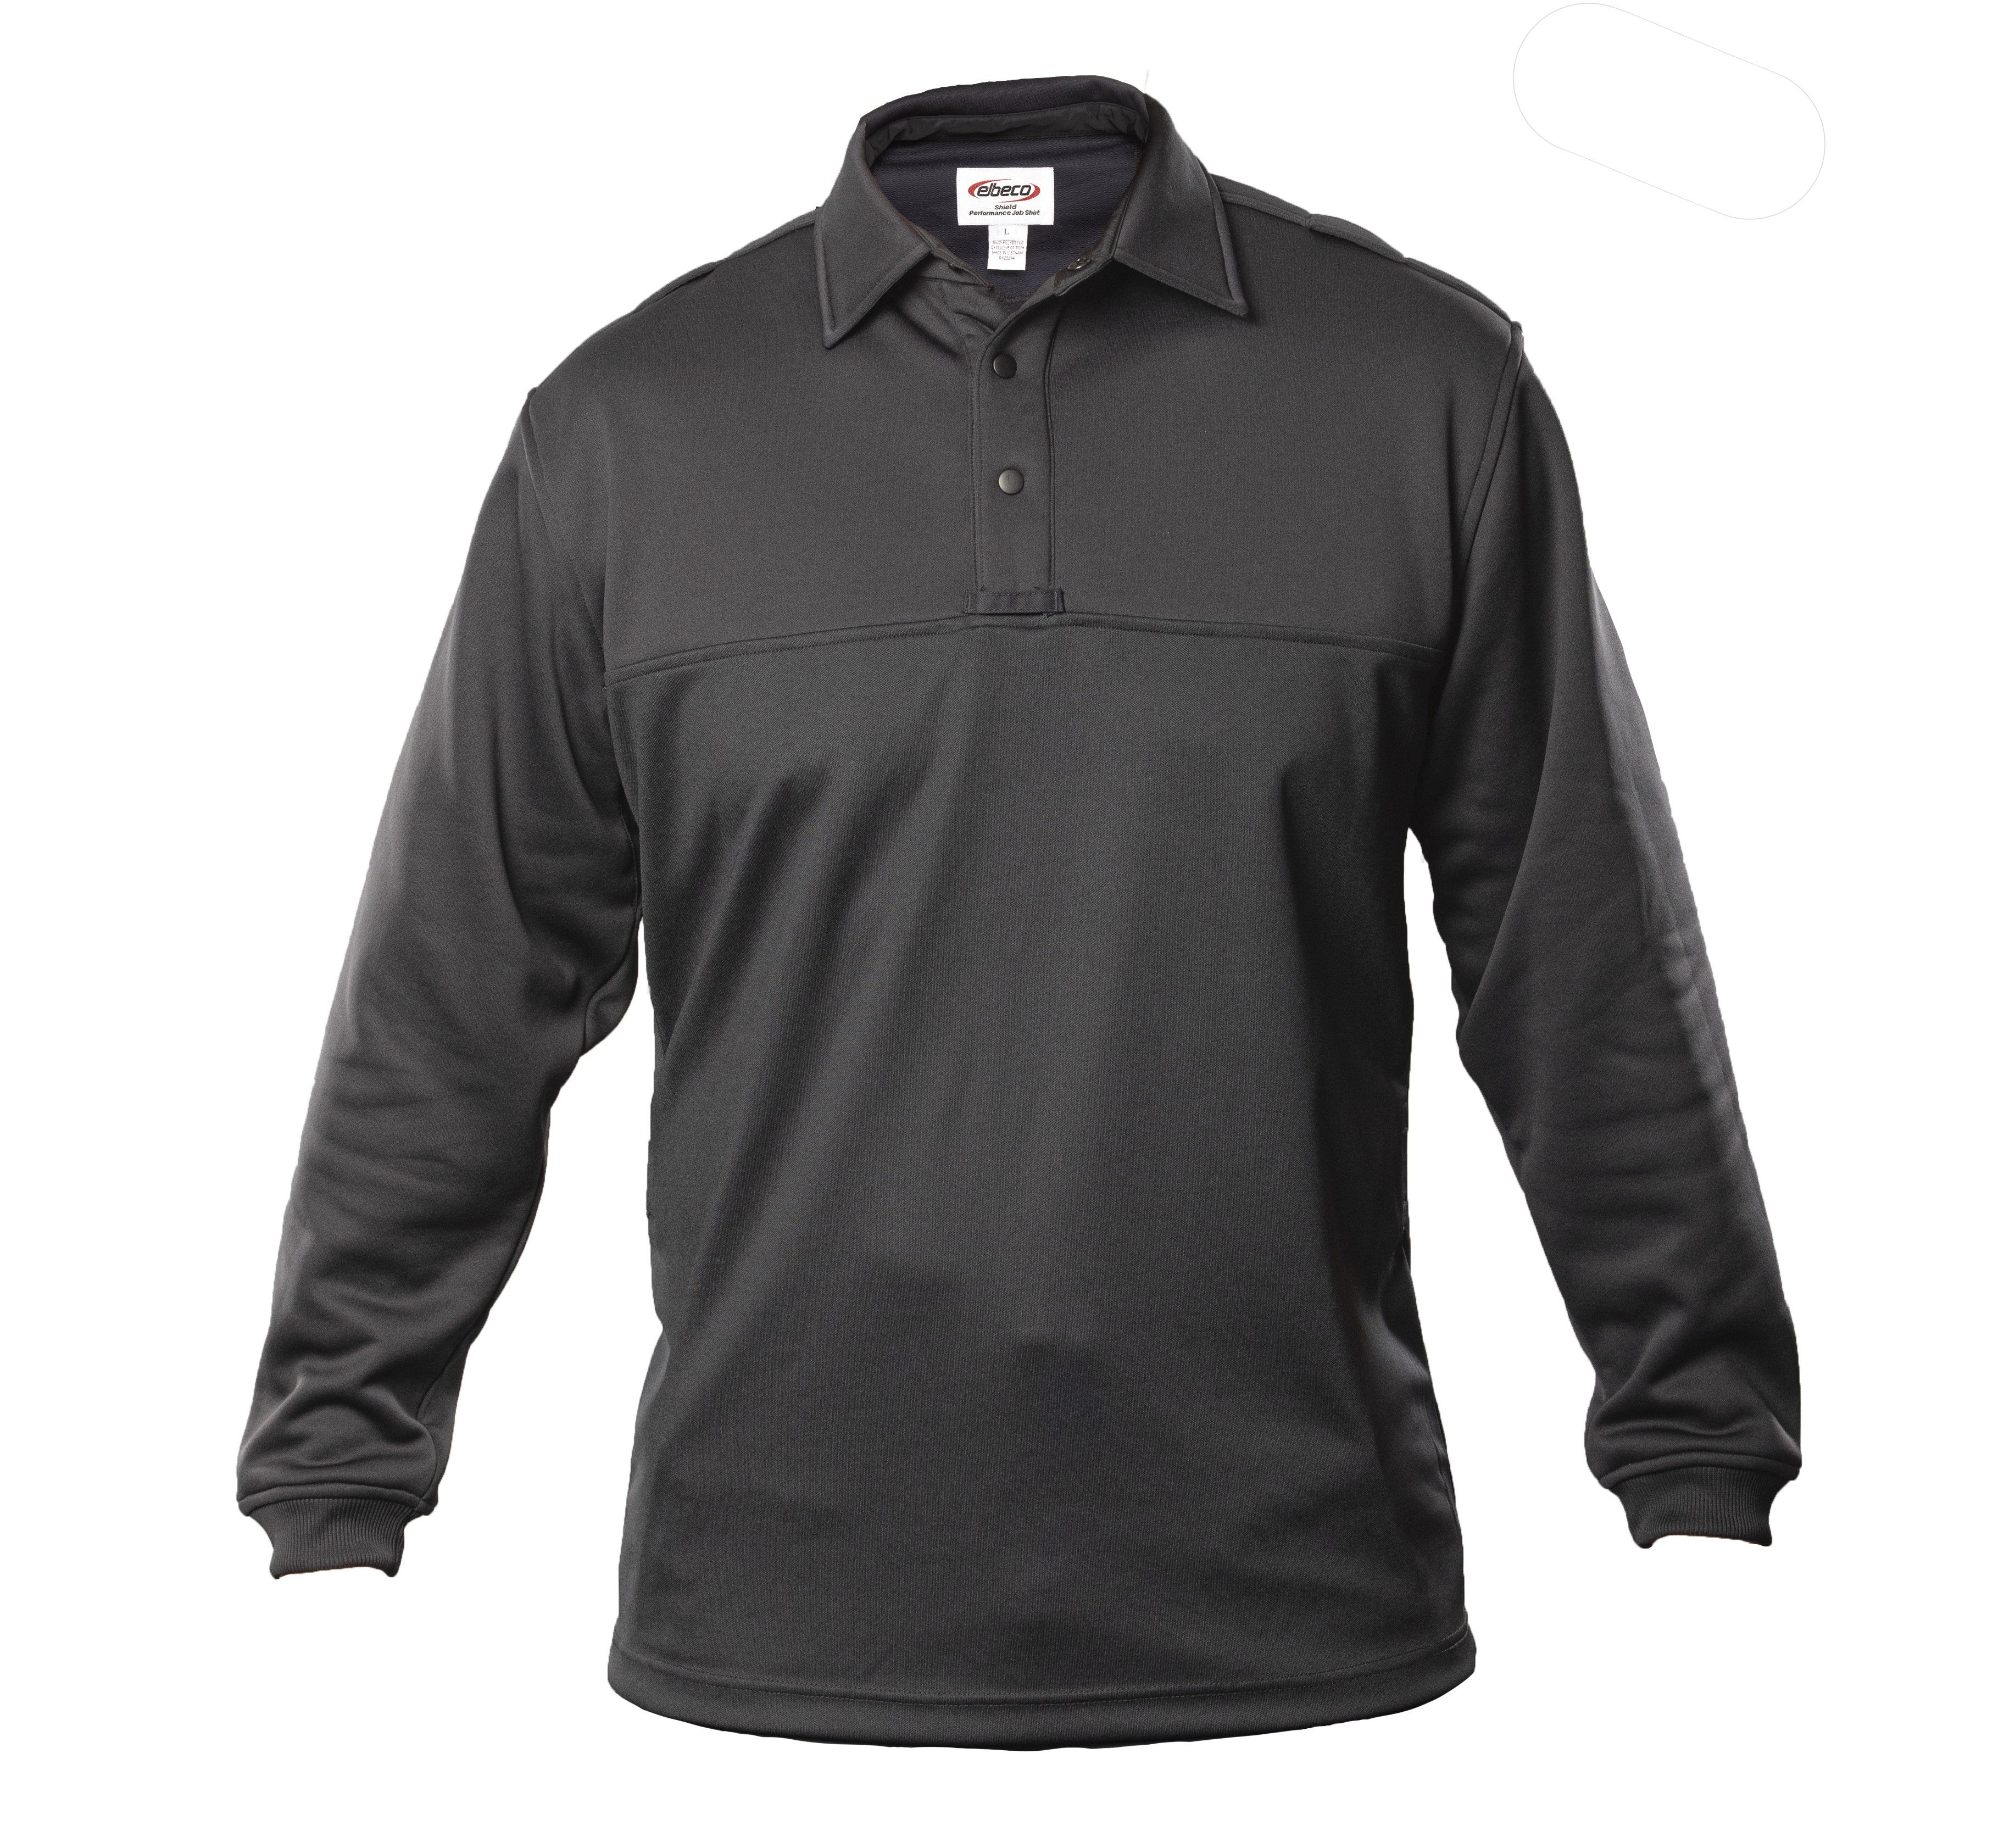 UV2 FlexTech (UnderVest) Shirt | Frontline Outfitters